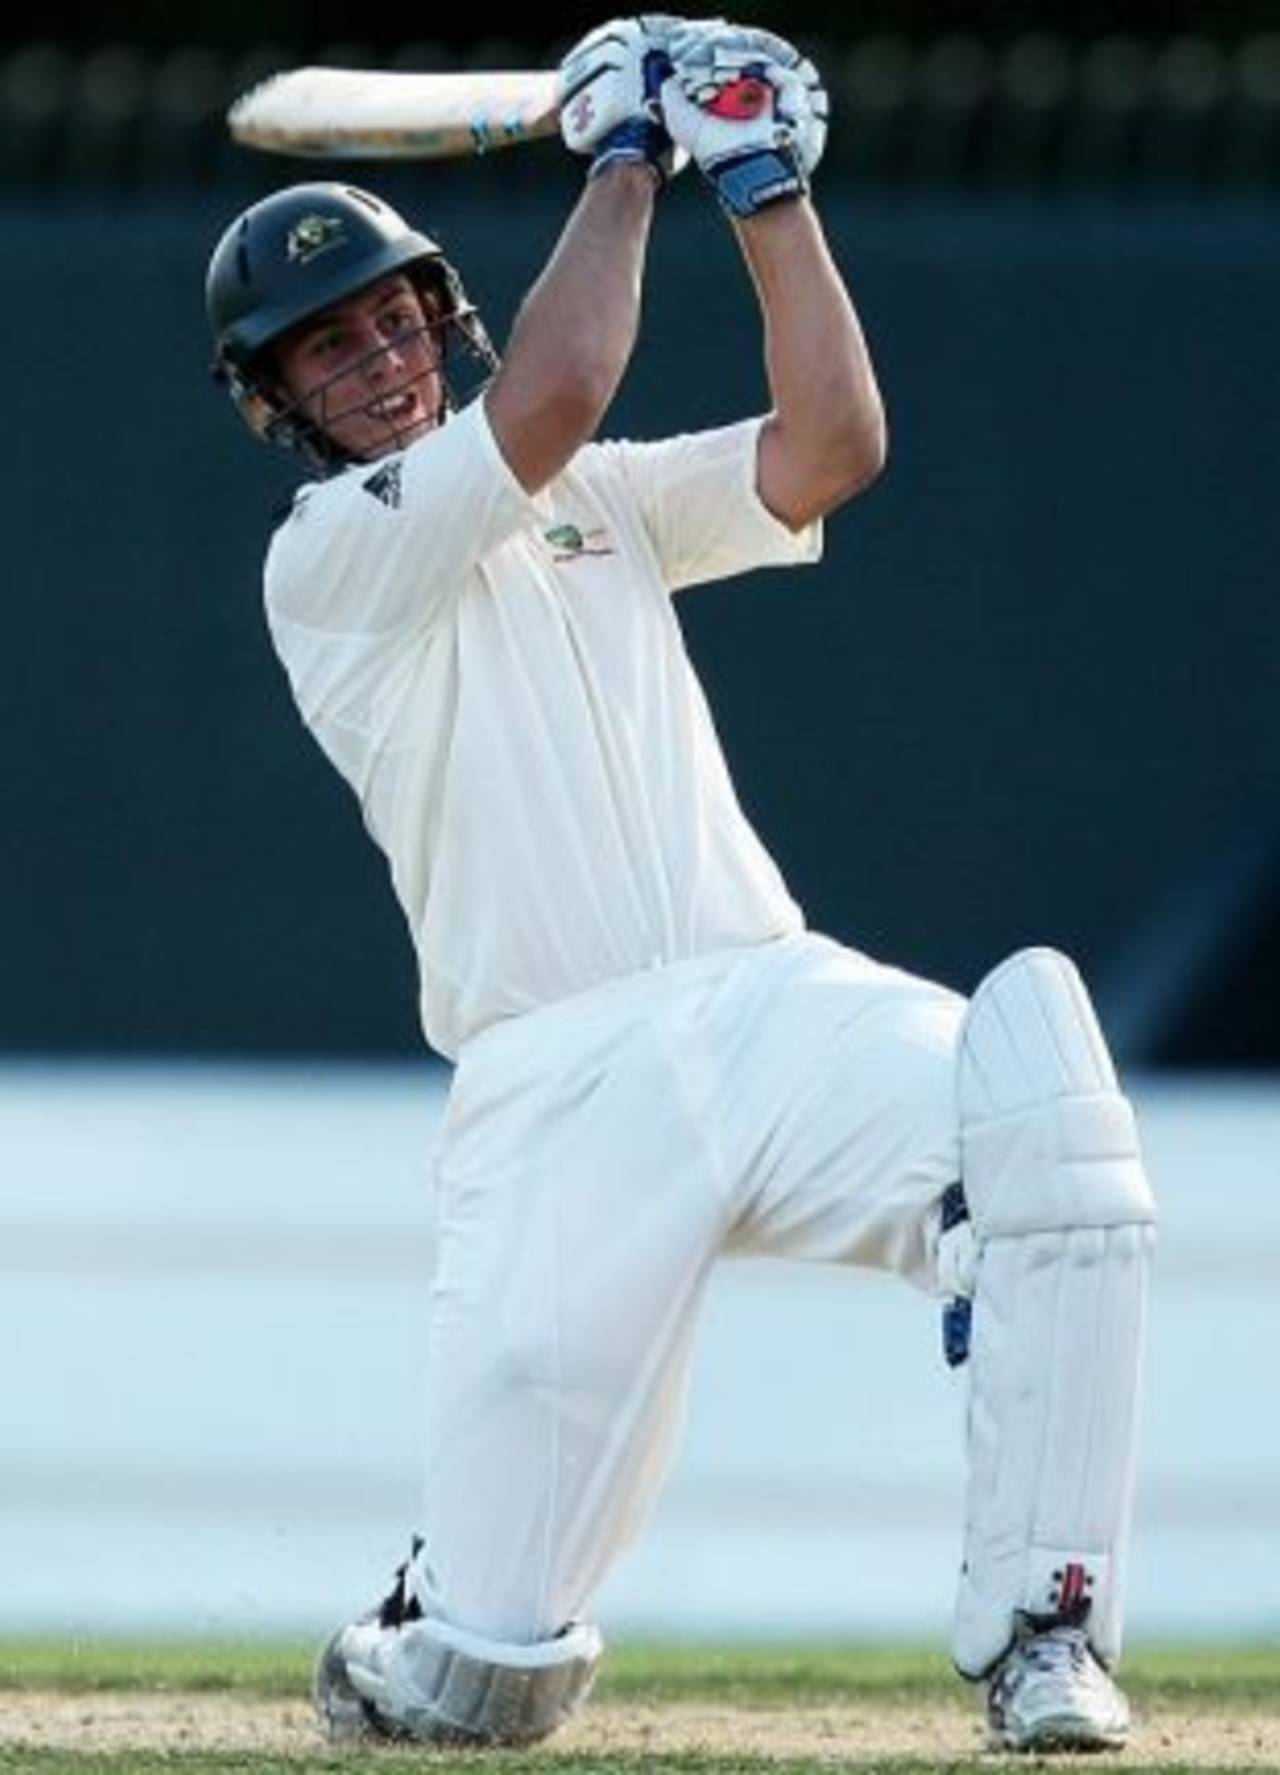 Mitchell Marsh hits straight, Australia Under-19 v India Under-19, 1st Test, Hobart, 3rd day, April 13, 2009